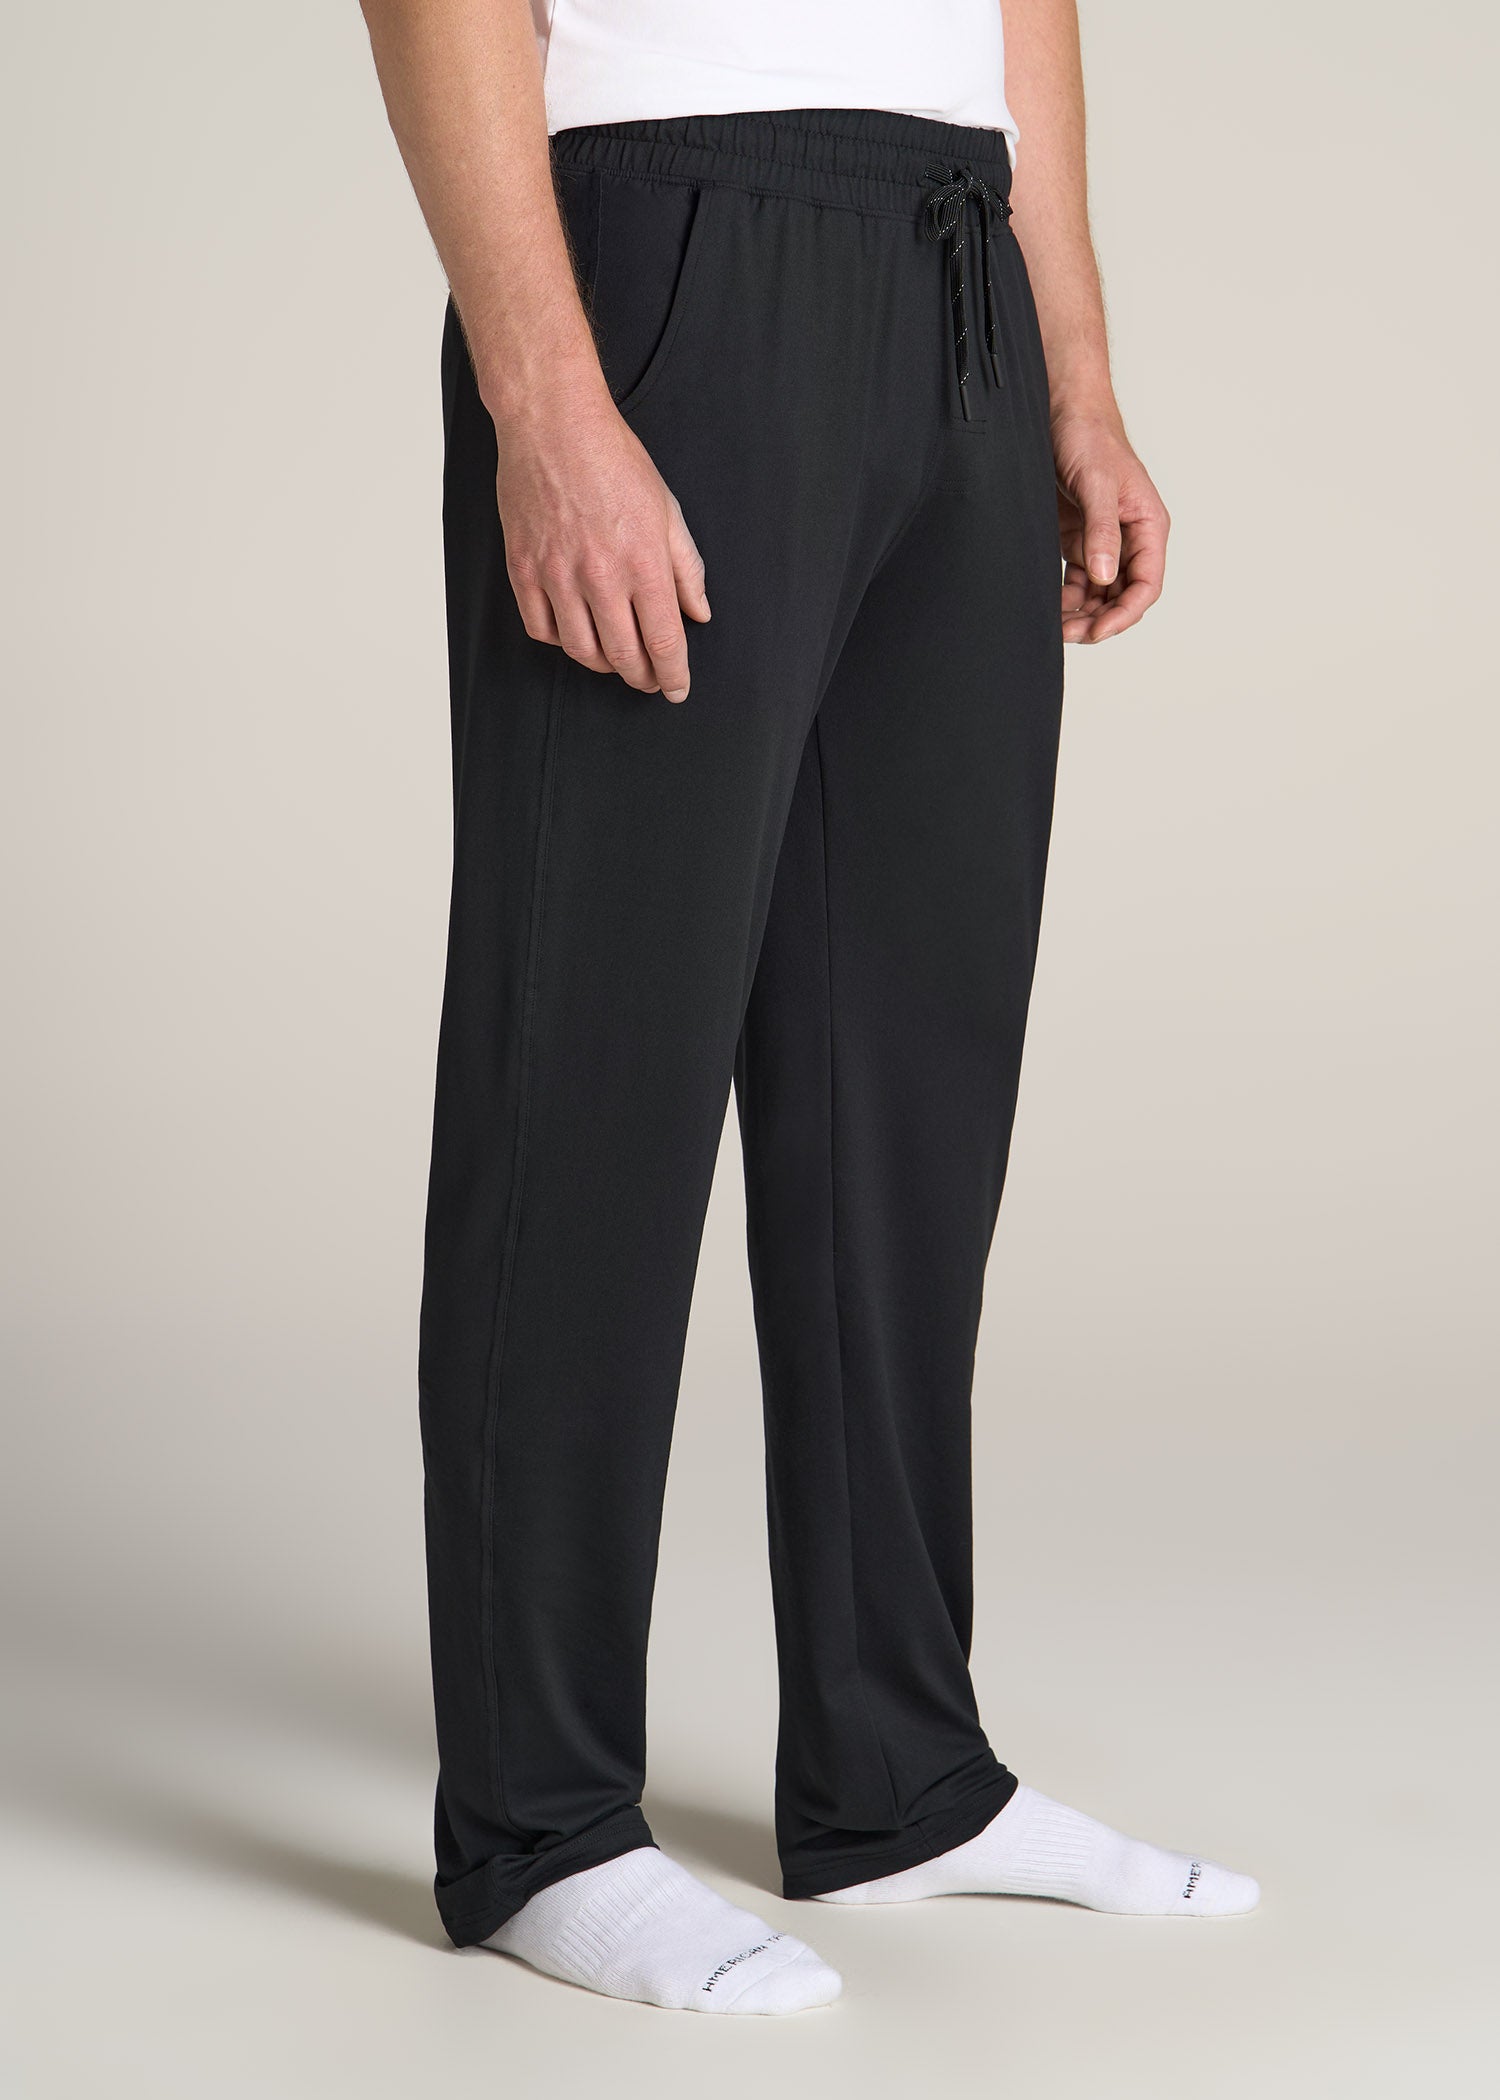 Jockey Men's Plaid Pajama Pants with Pockets XL | Plaid pajamas, Plaid pajama  pants, Fleece lounge pants